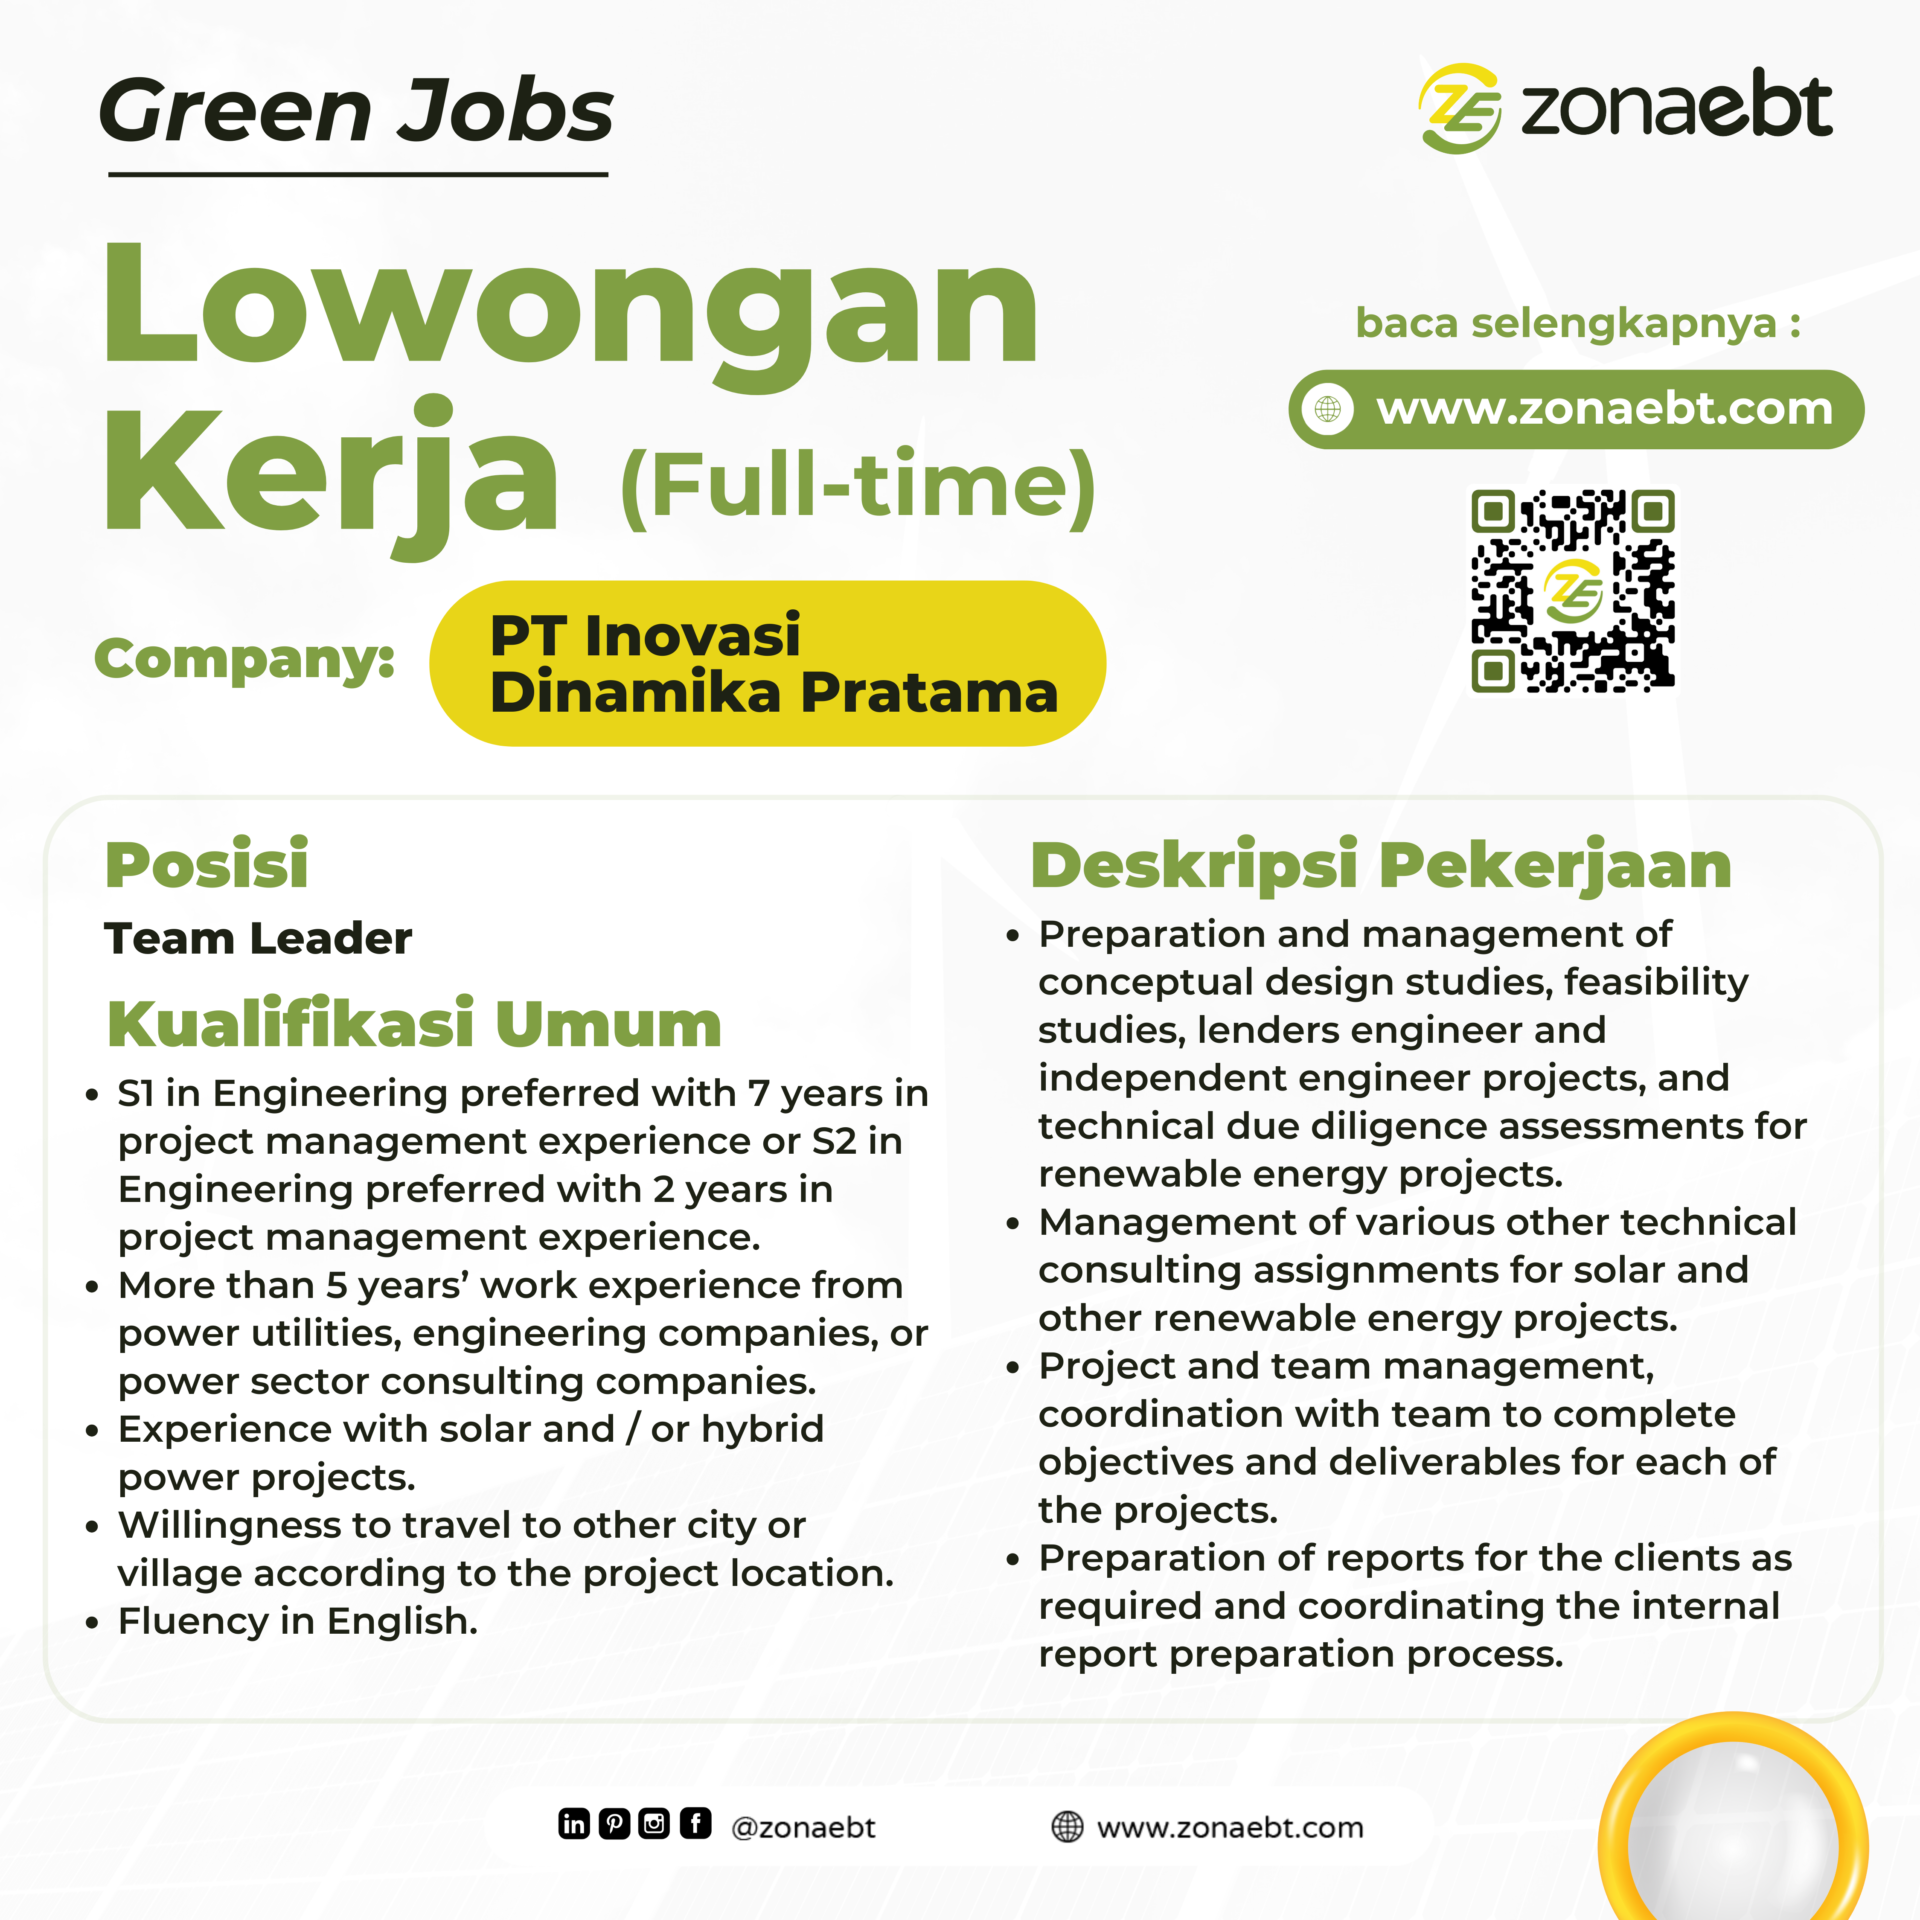 Team leader green jobs zonaebt.com